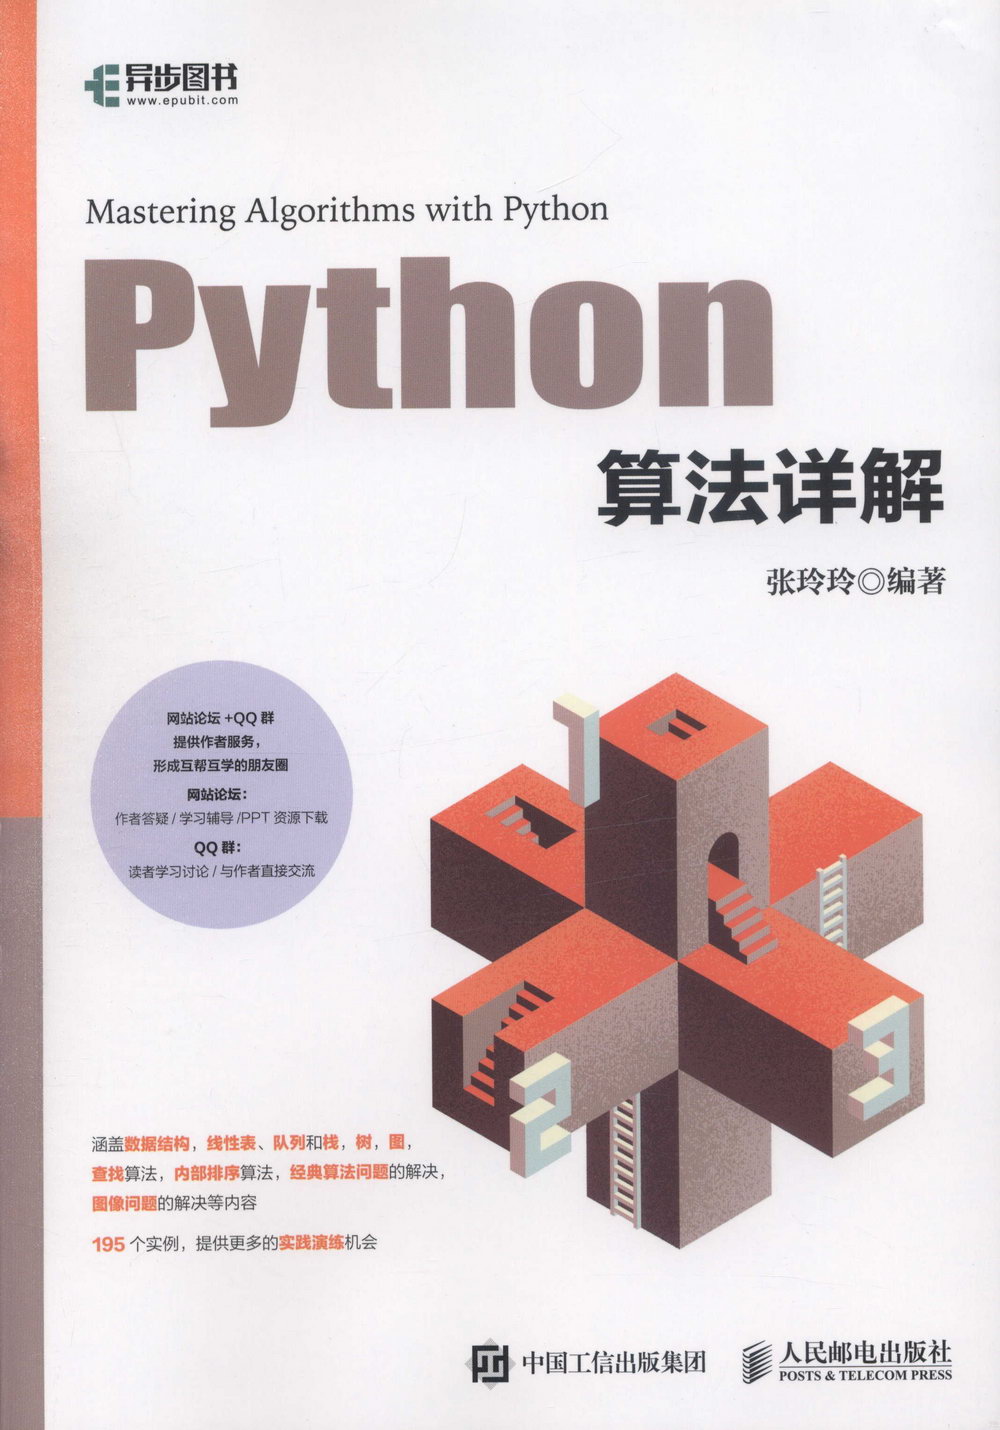 Python演算法詳解